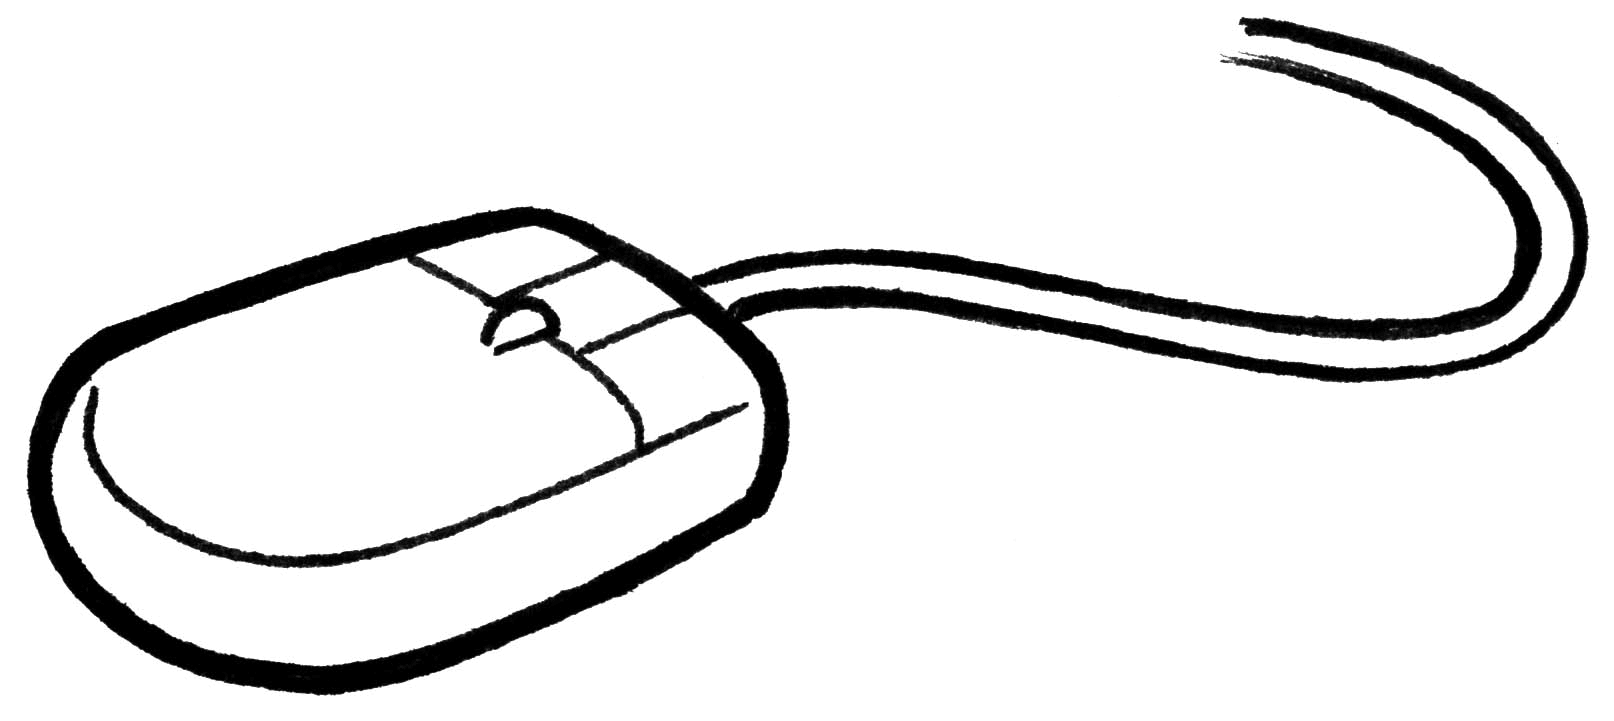 Computer mouse clip.